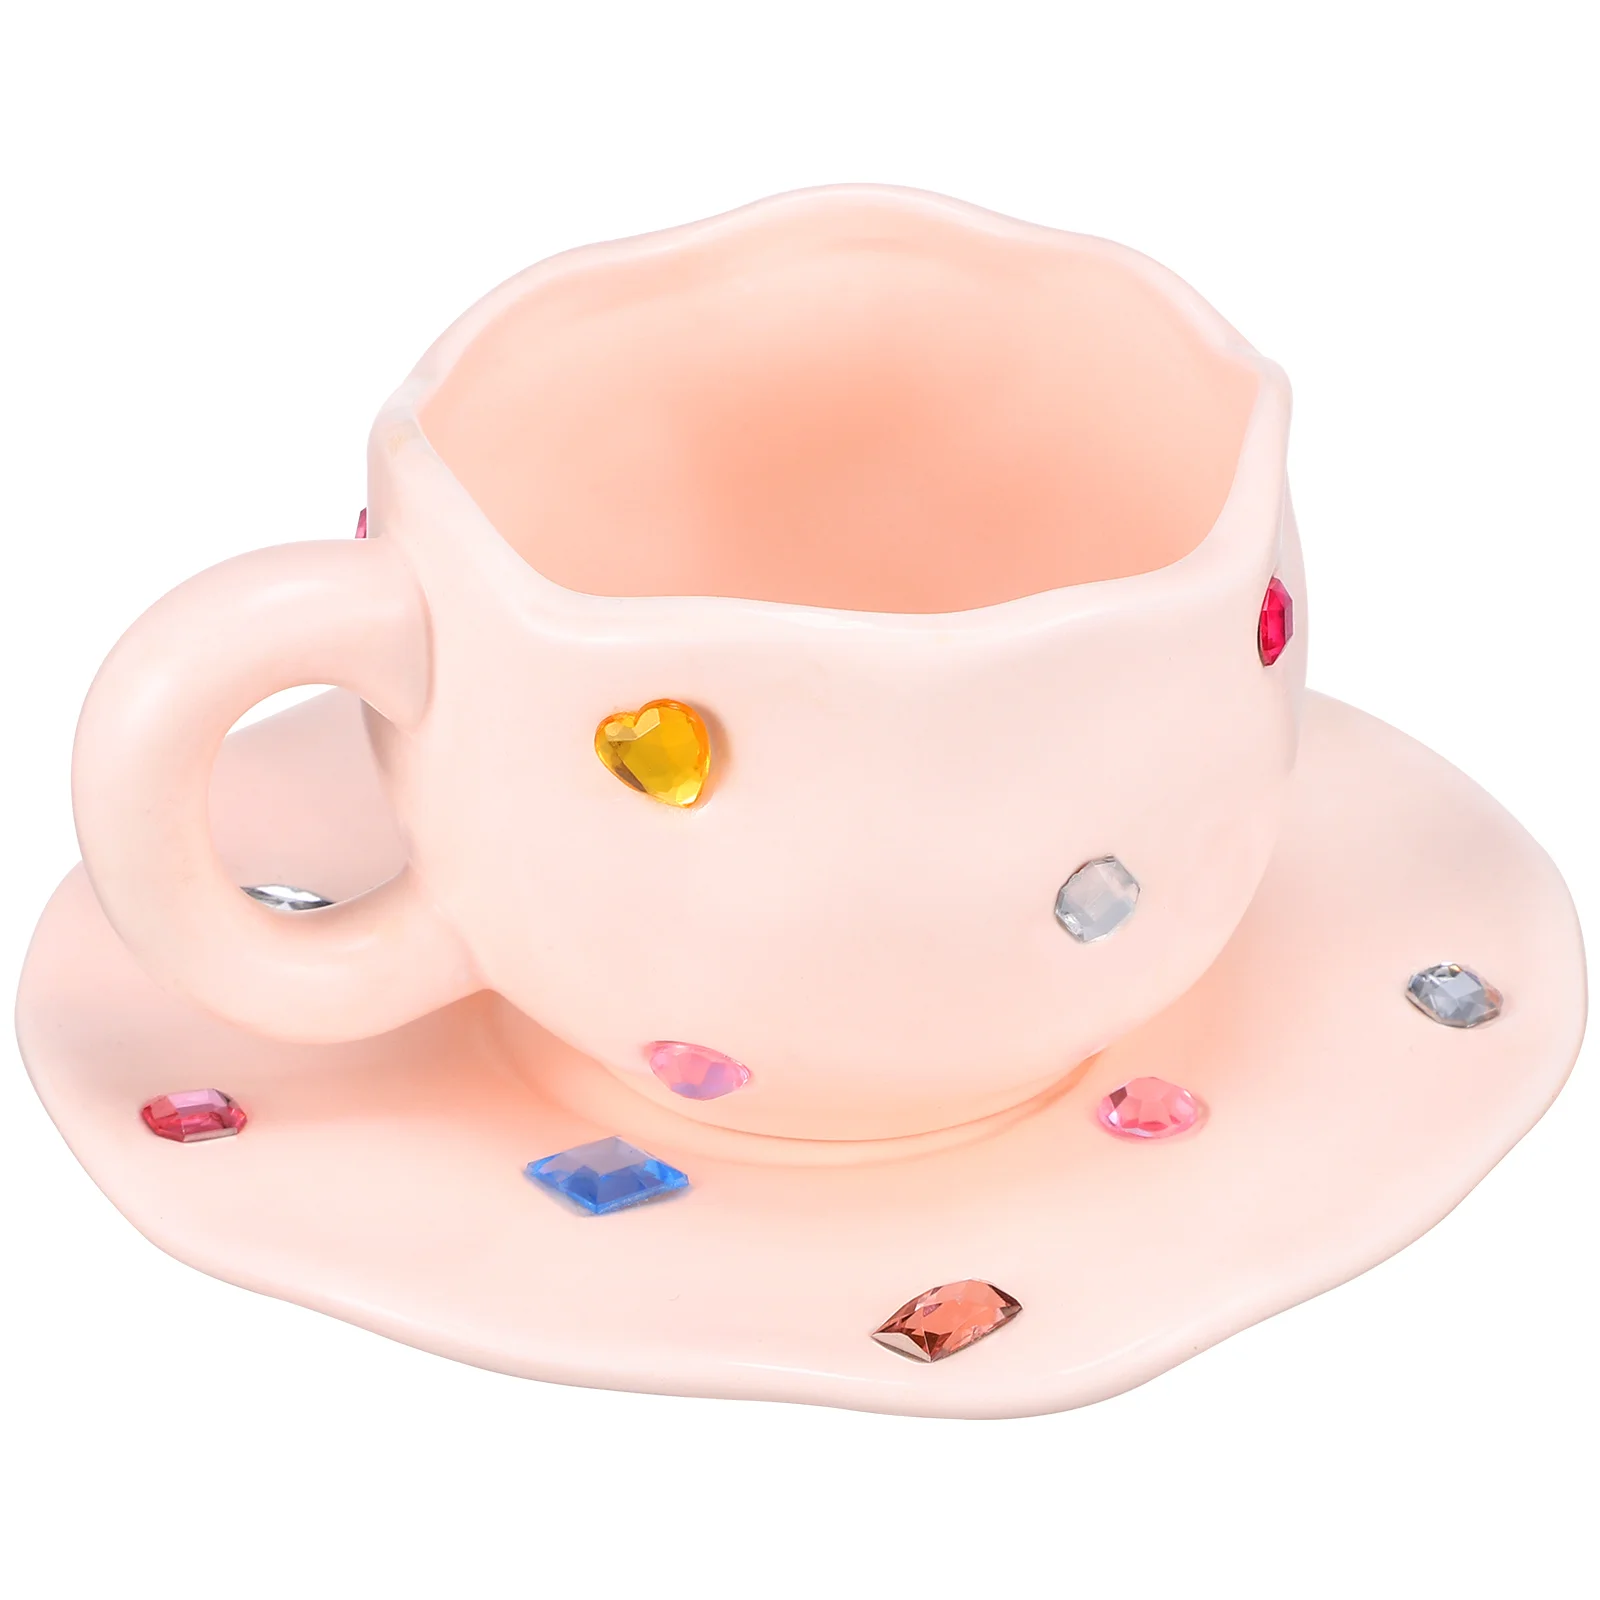 

Water Cup With Handle Cappuccino Mug Ceramic Cups Juice Mugs Coffee Milk Saucer